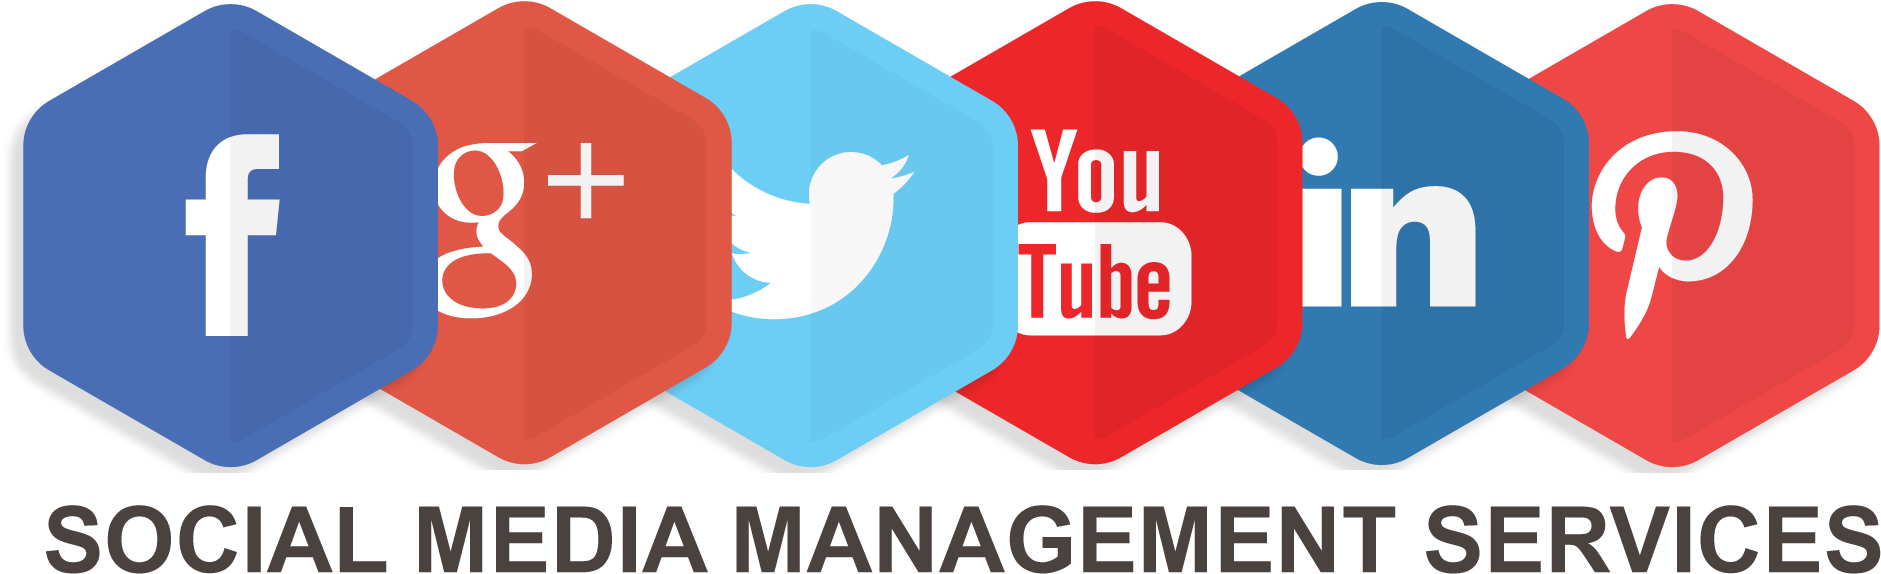 Social Media - Social Media Management Services (2054x627)